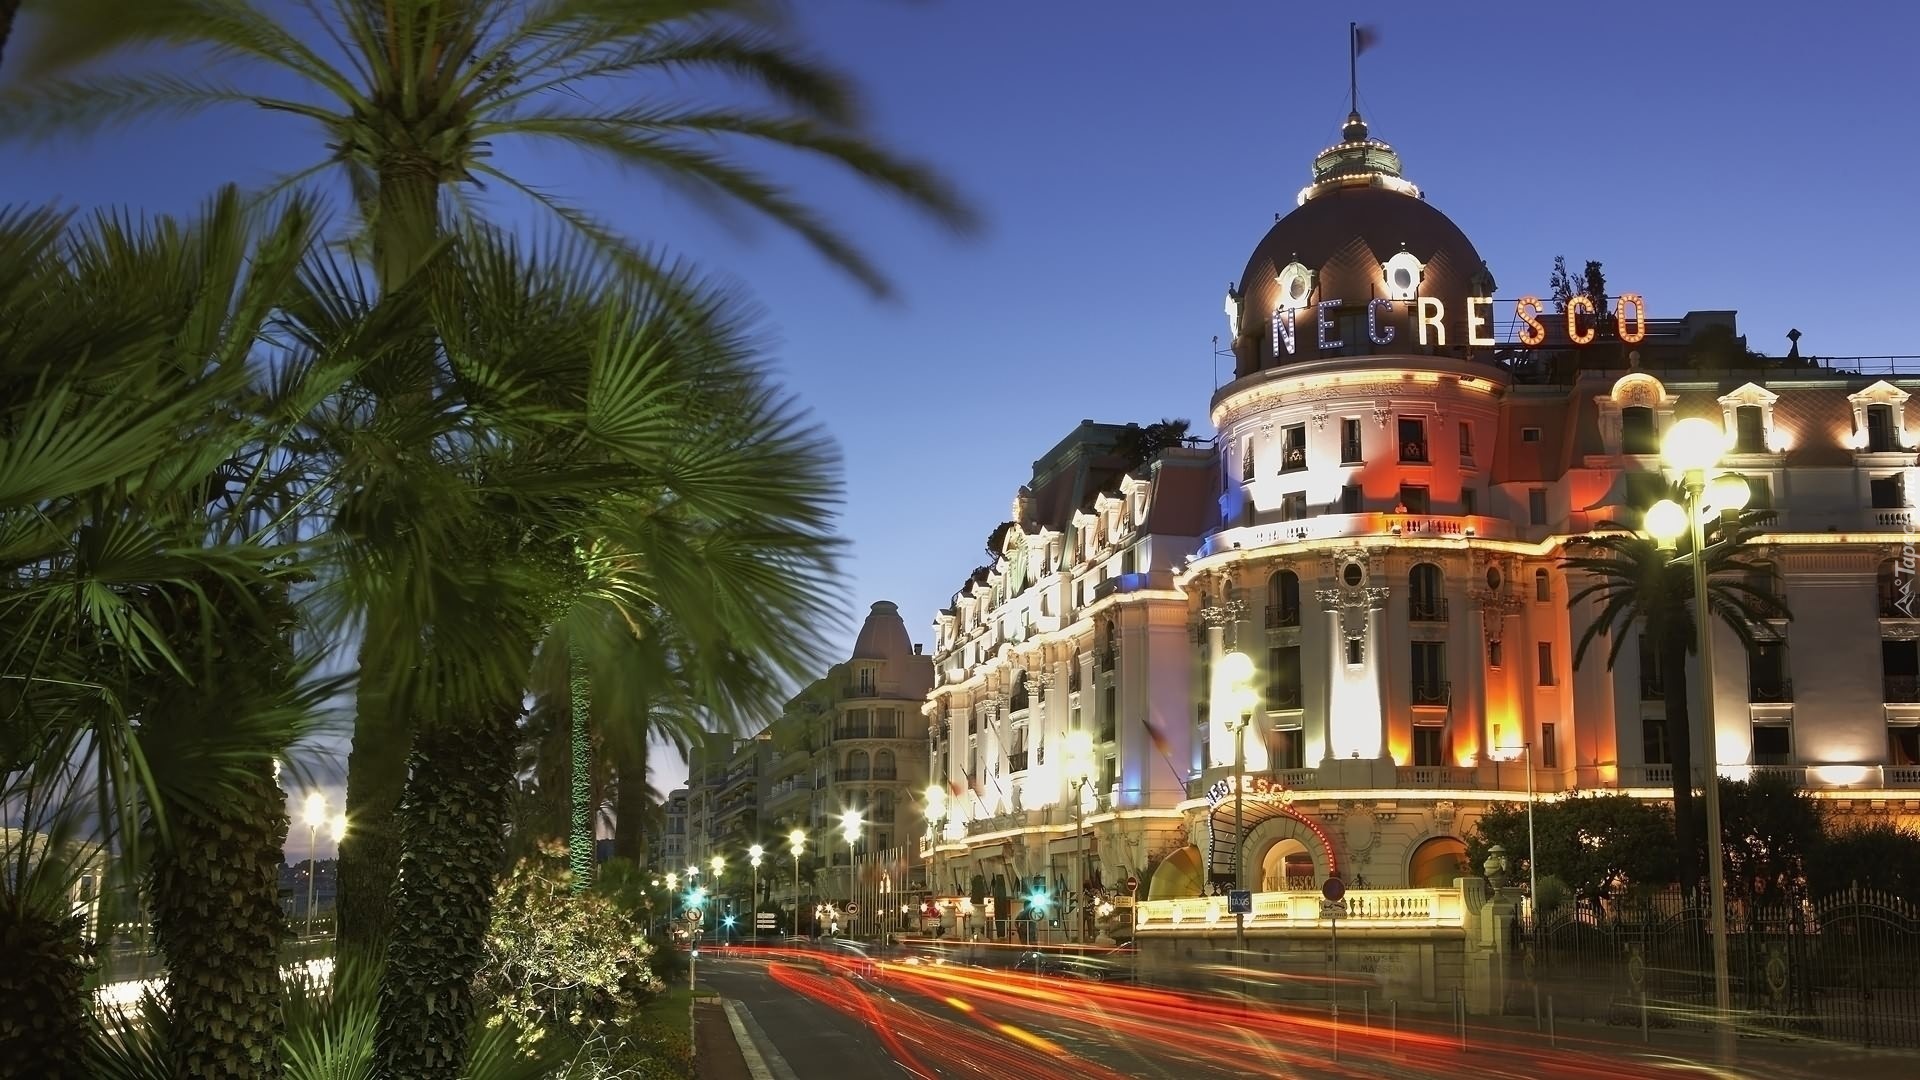 Hotel, Ulica, Palmy, Miasto, Francja